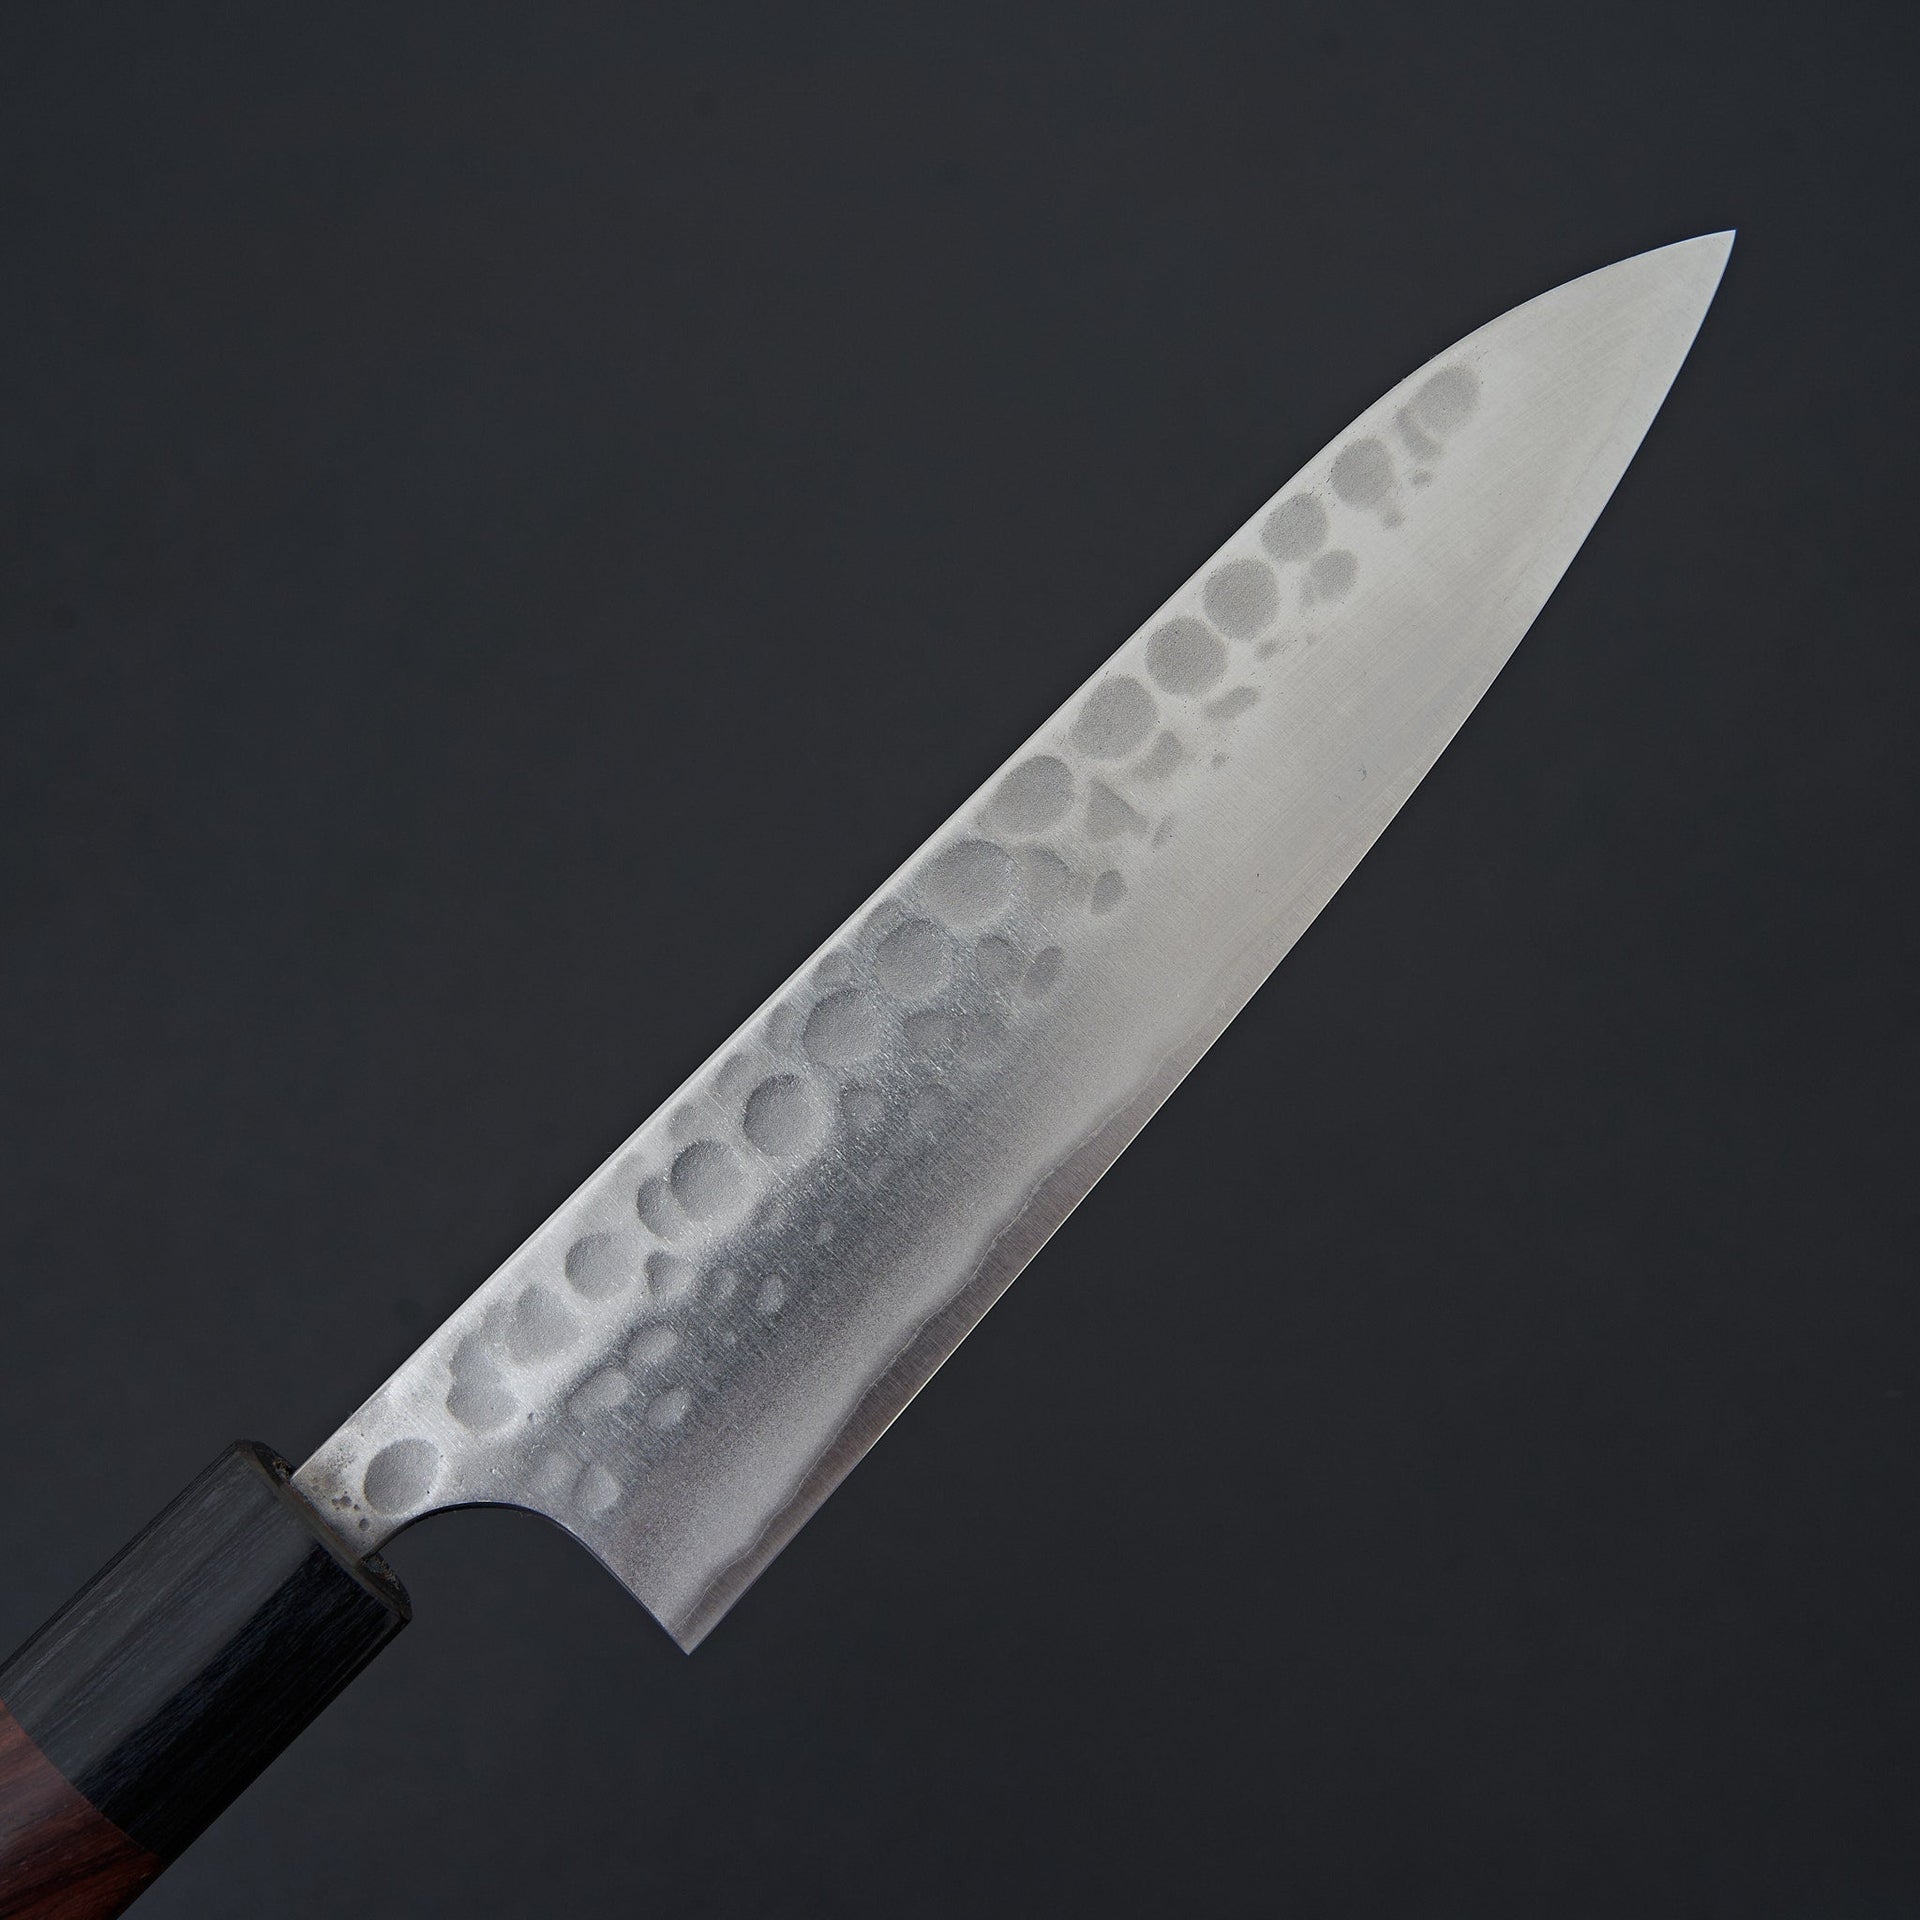 Katsushige Anryu Tsuchime Petty 150mm-Knife-Katsushige Anryu-Carbon Knife Co